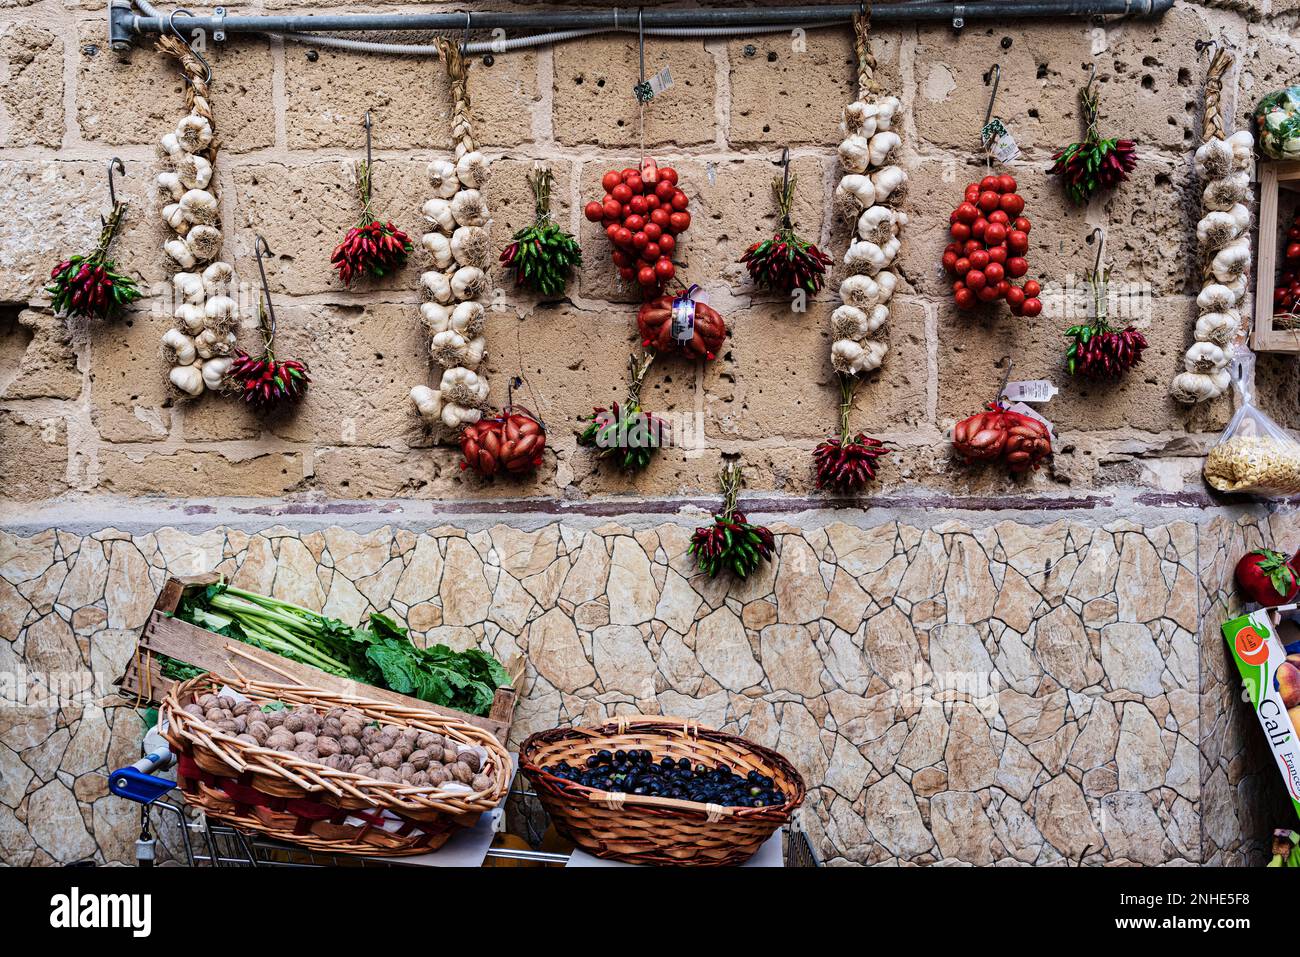 Vegetable stall, Bari, Puglia, Italy Stock Photo